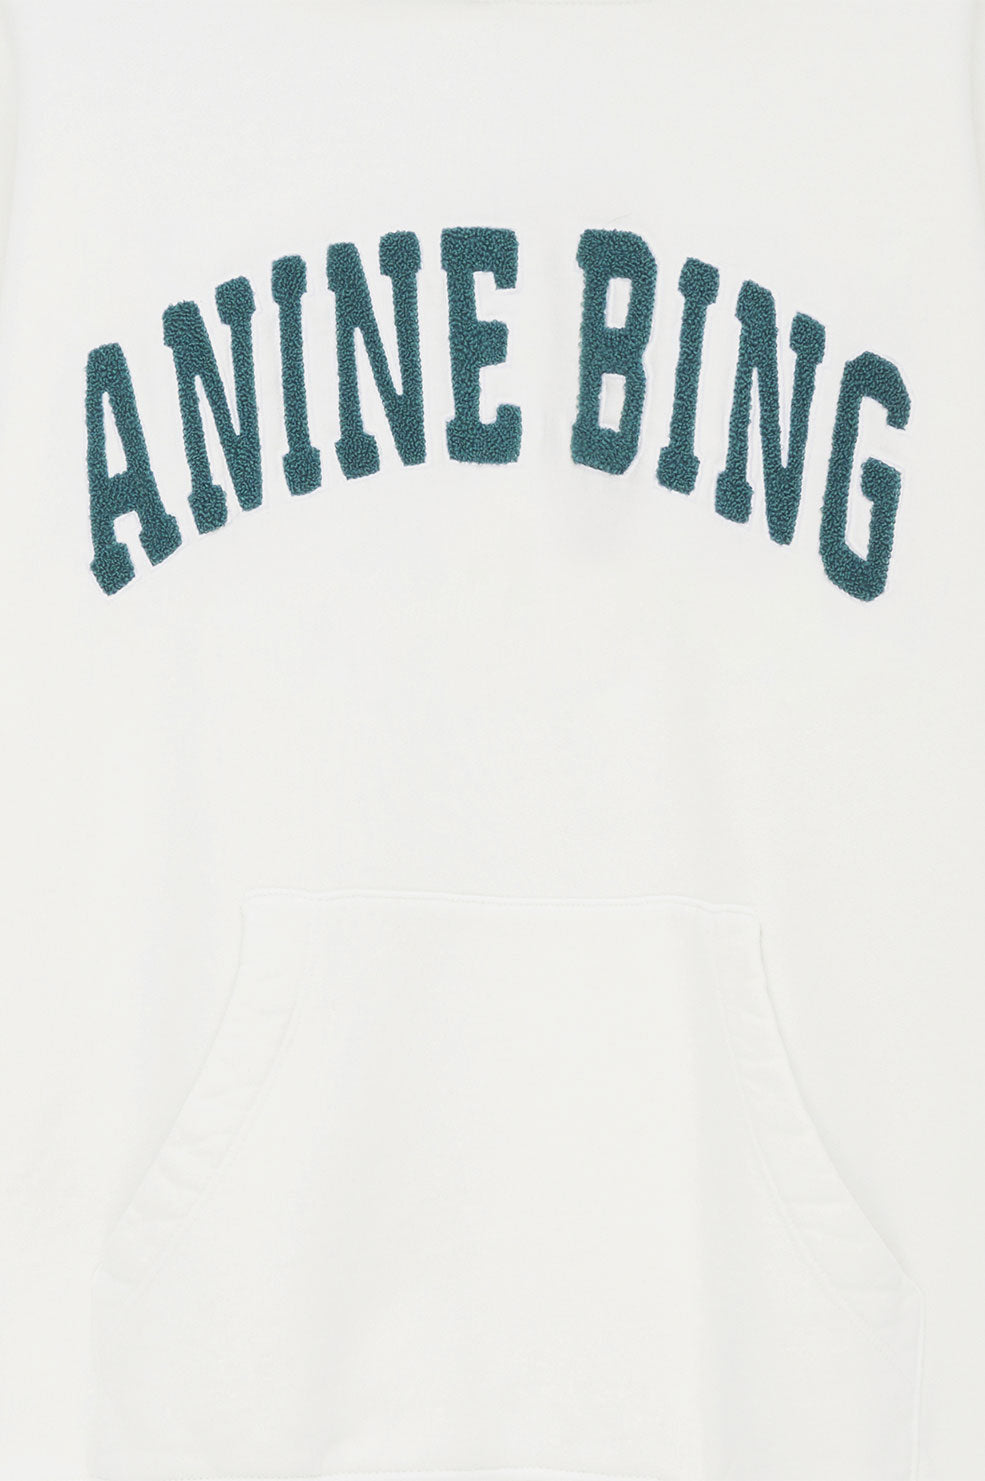 HARVEY SWEATSHIRT DUSTY OLIVE, Anine Bing